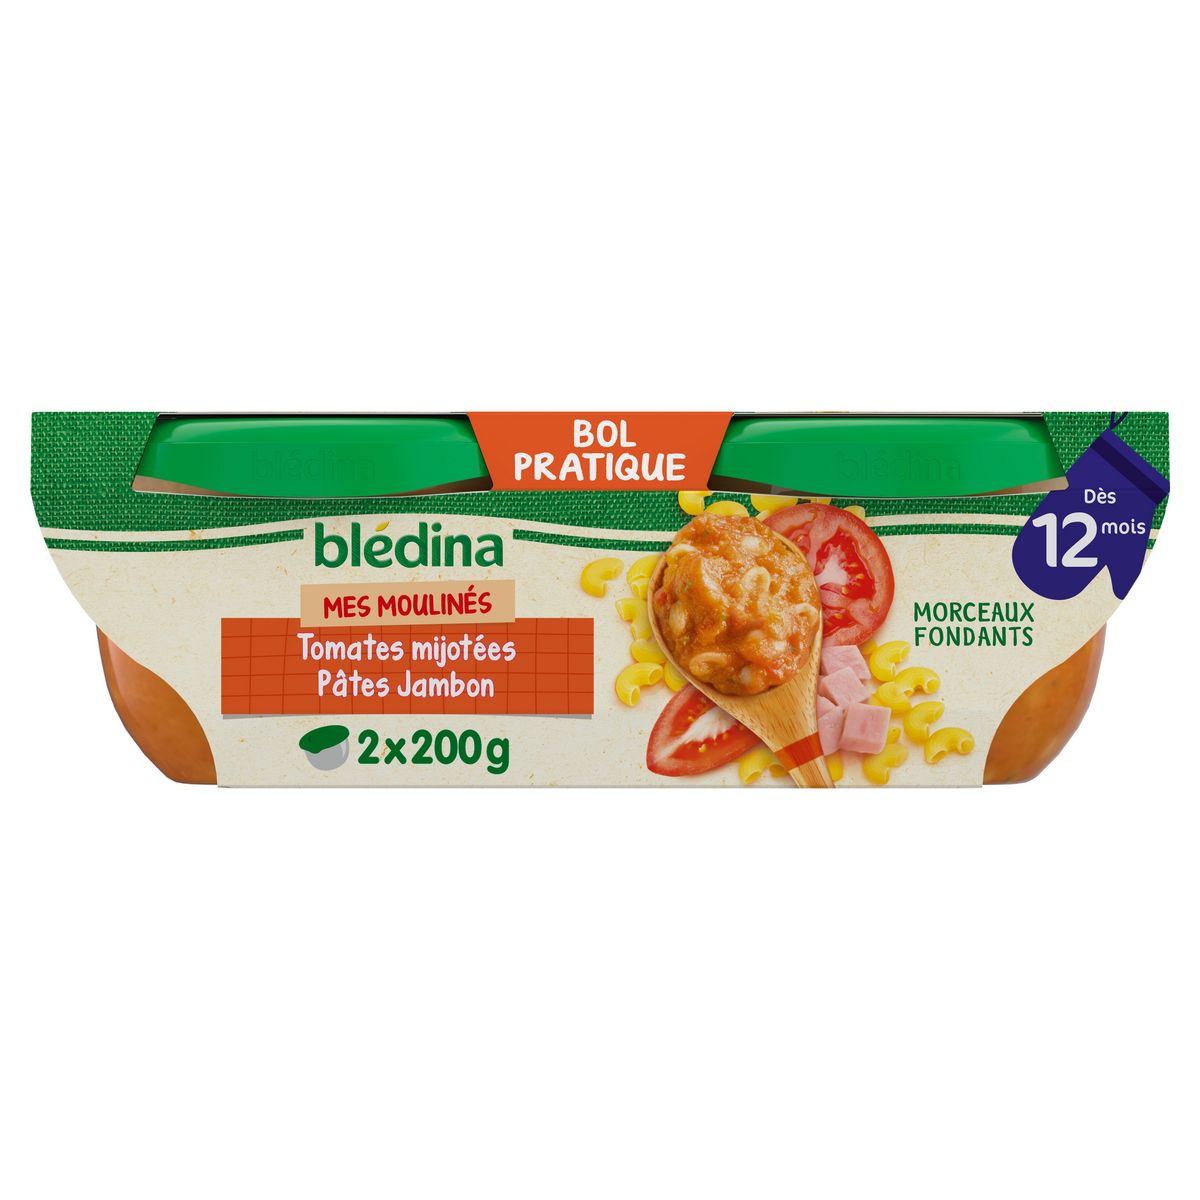 BLEDINA Mes moulinés bol tomates pâtes et jambon dès 12 mois 2x200g